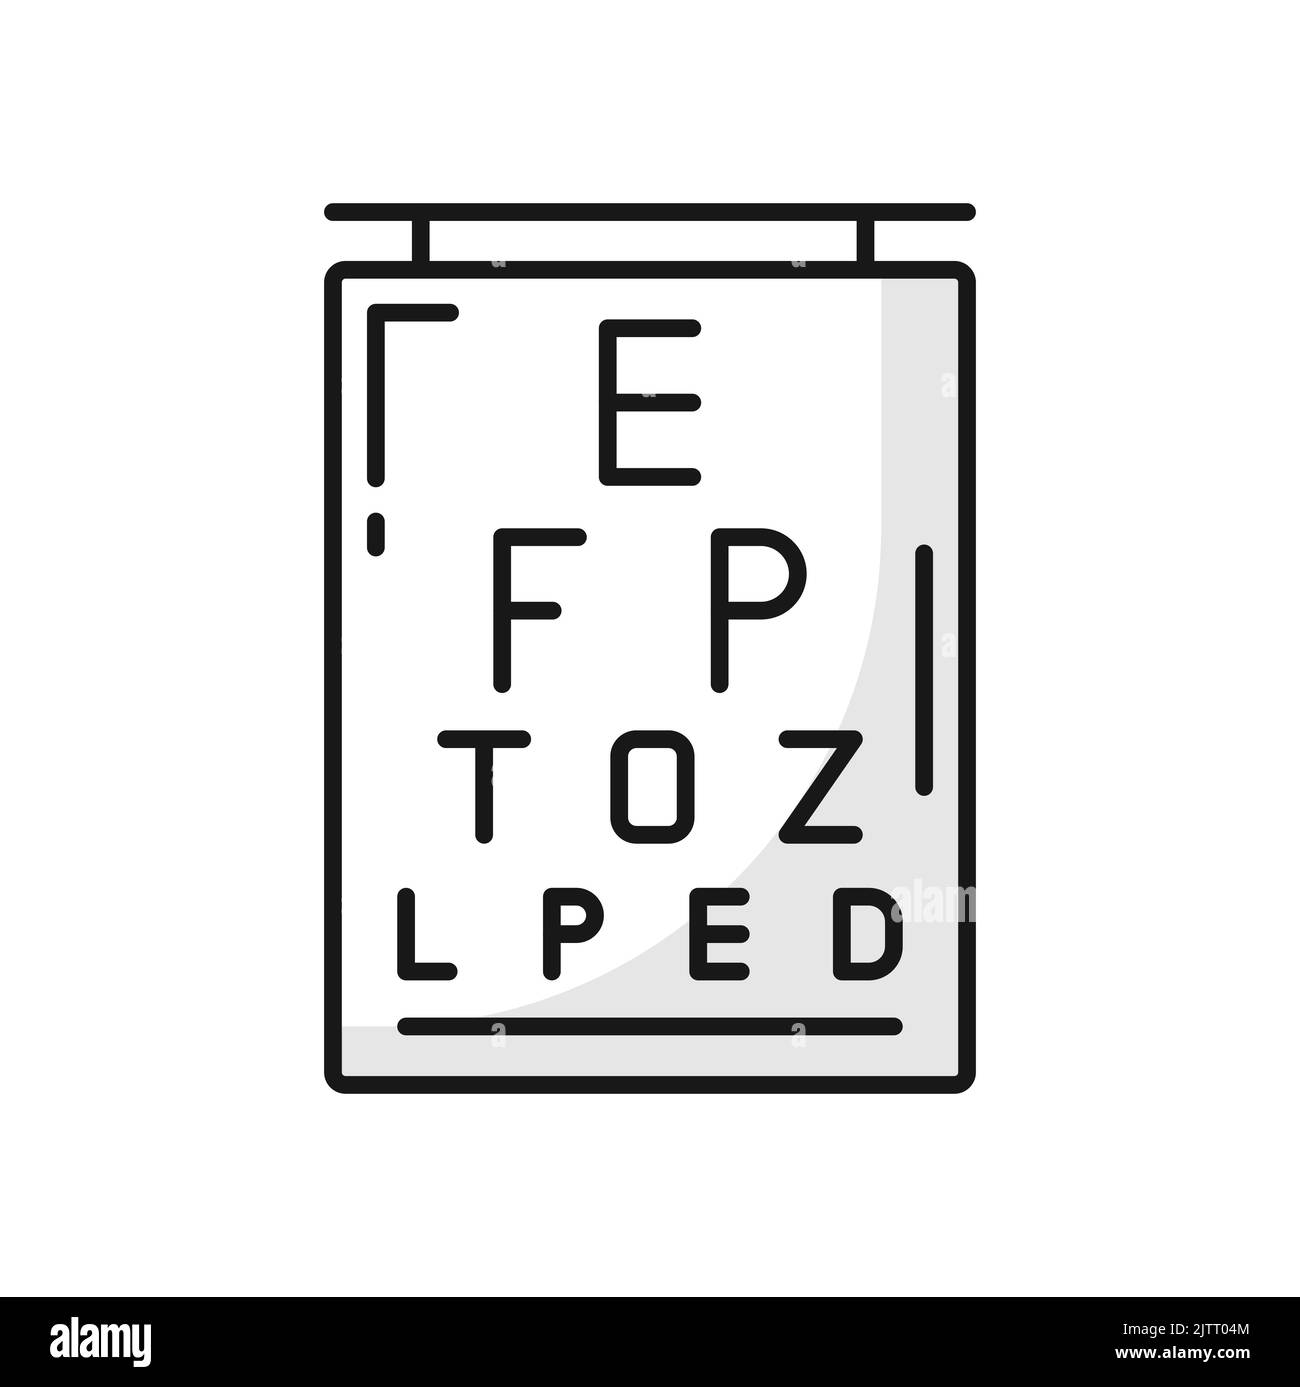 Eye chart, vision test or eyesight exam vector icon, ophthalmology examination. Eye chart, optometry vision check or visual sight examination, optotype alphabet or Snellen symbols or optical measure Stock Vector